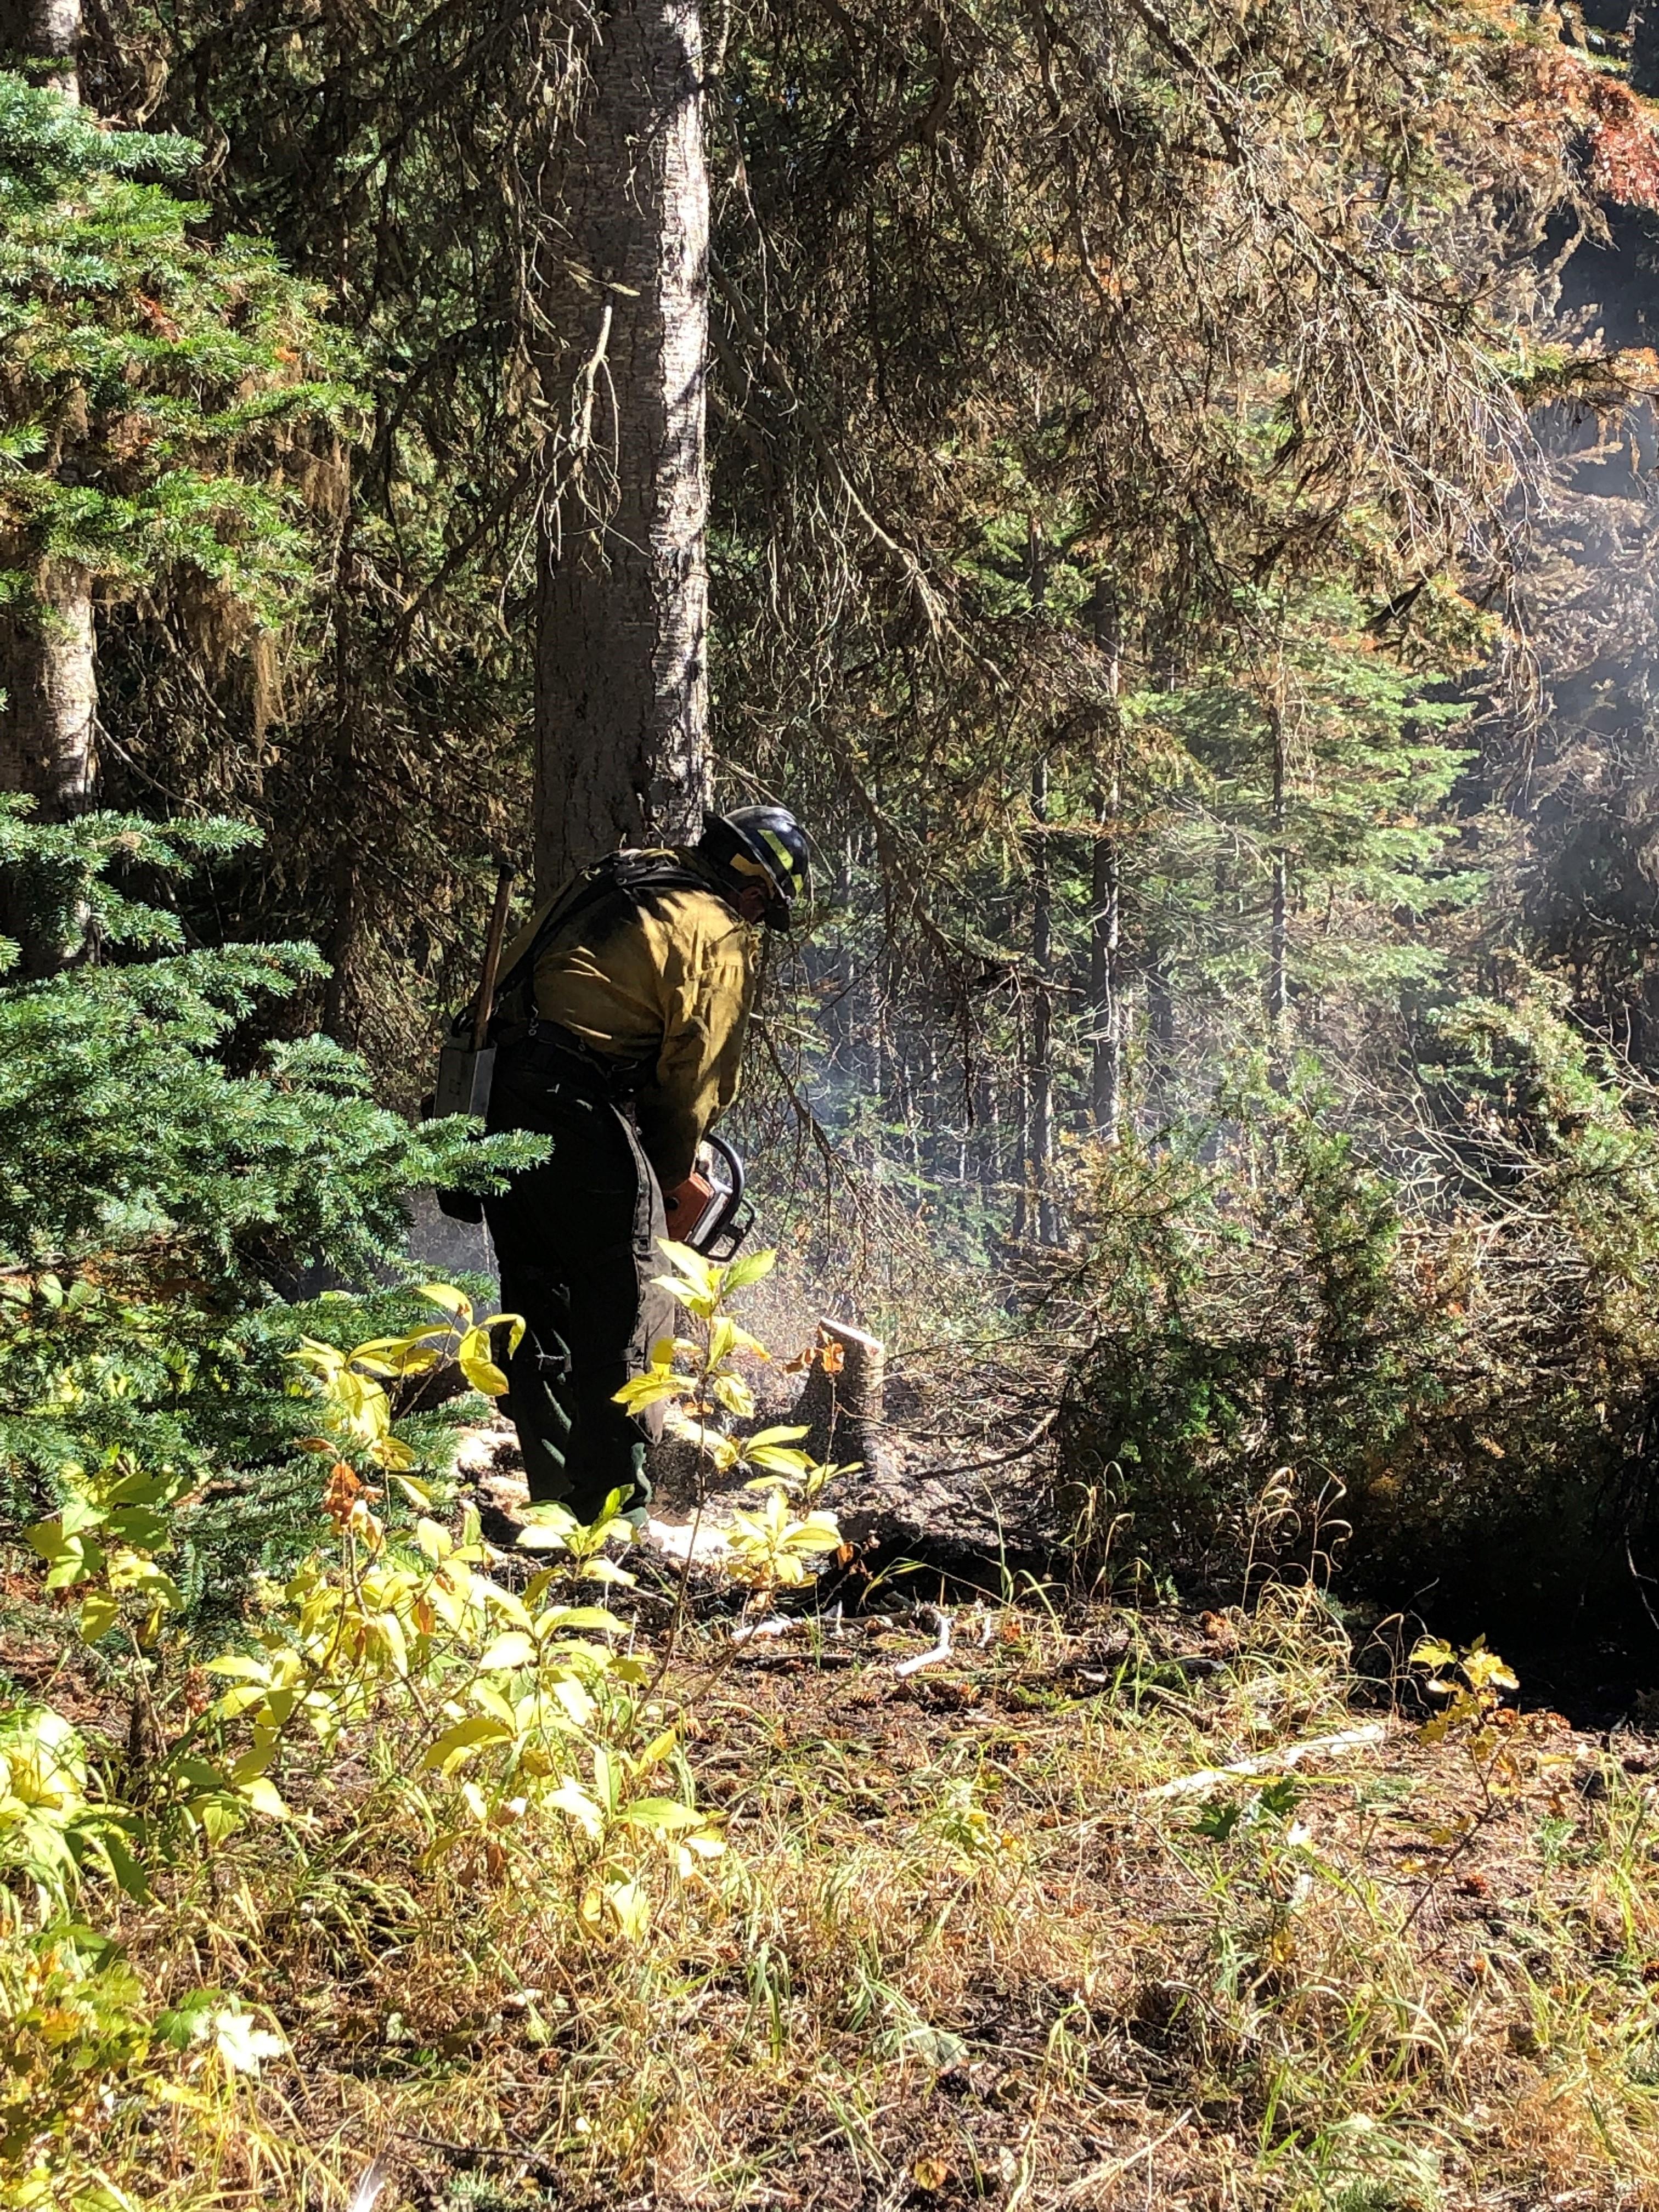 Hazard Tree Mitigation on the Weasel Fire